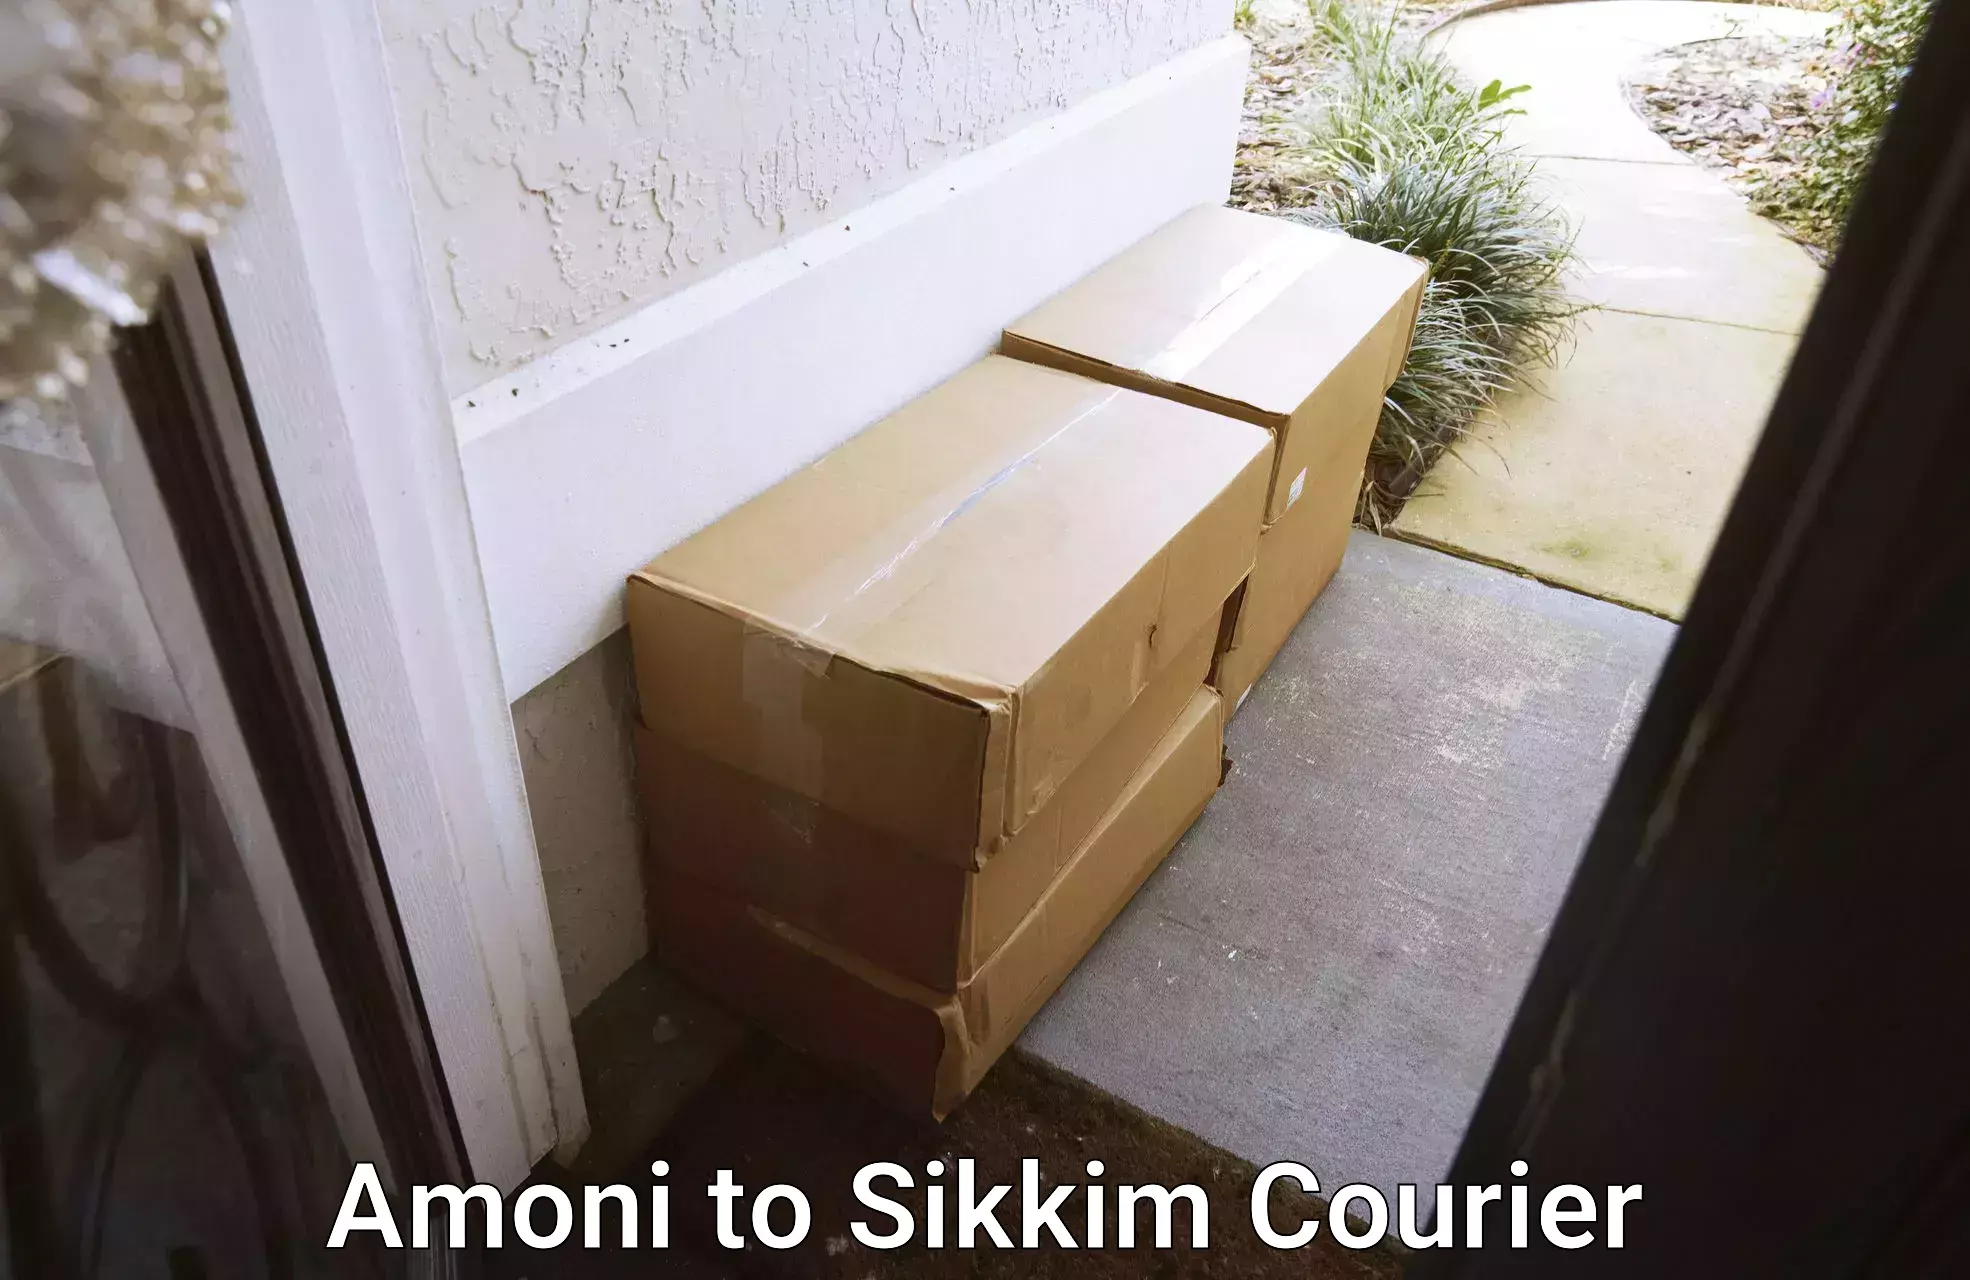 Doorstep delivery service Amoni to Pelling